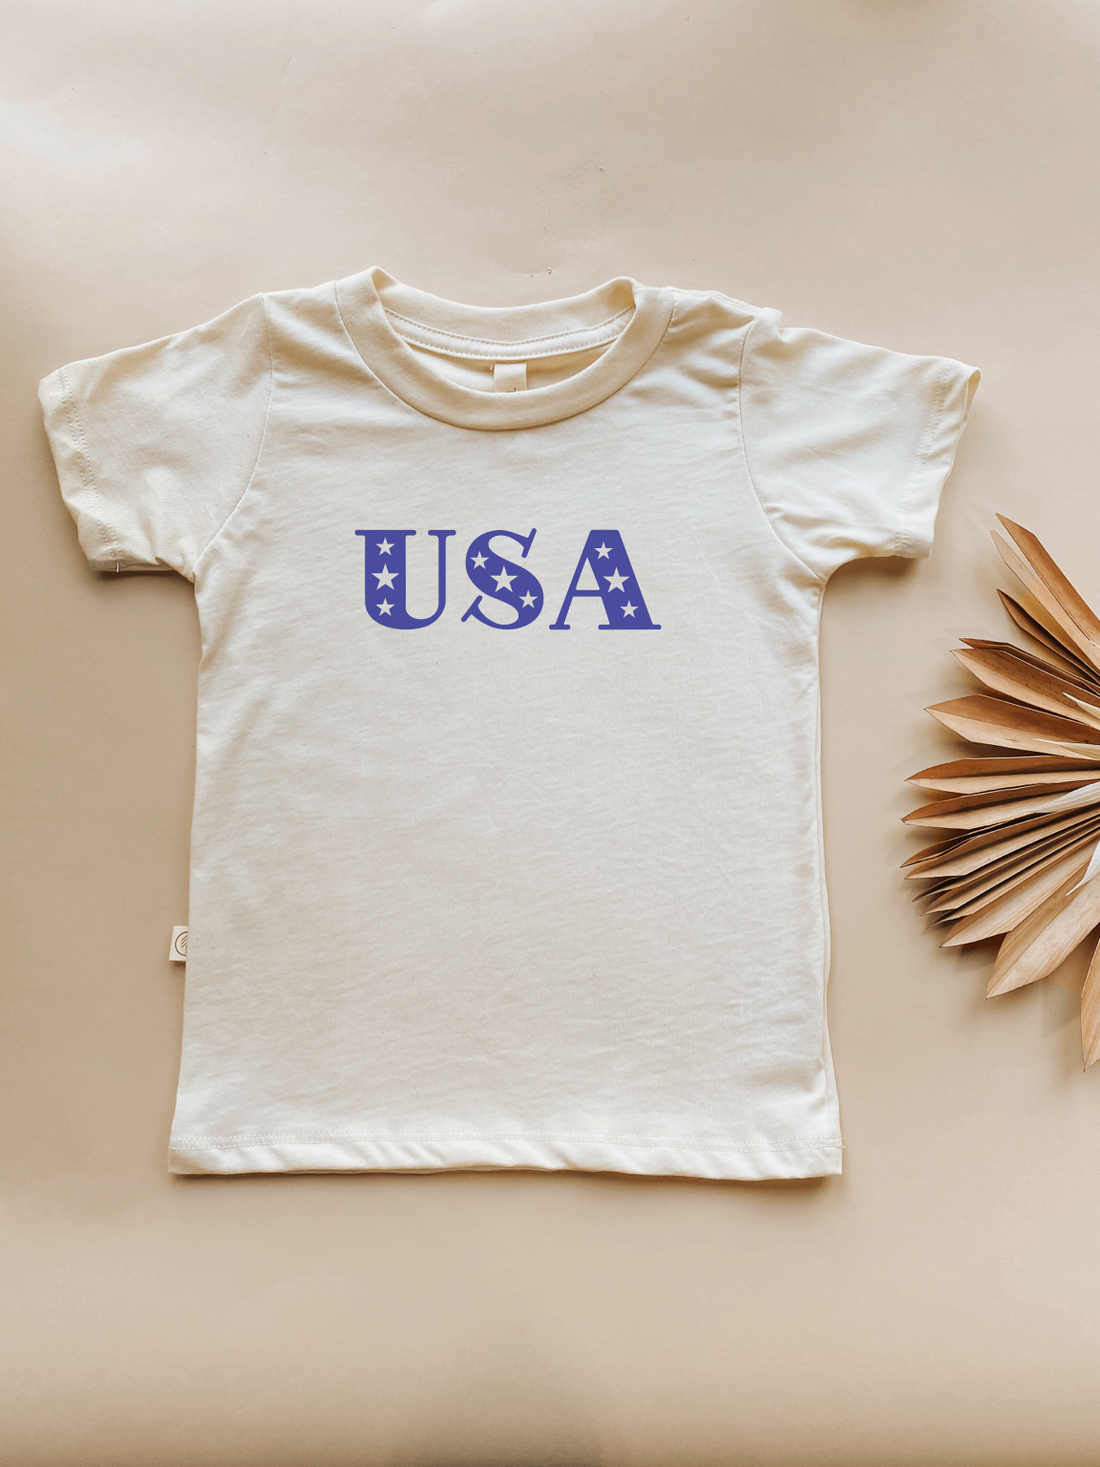 6T | Toddler Crew Neck Tee | USA in Cobalt | Organic Cotton